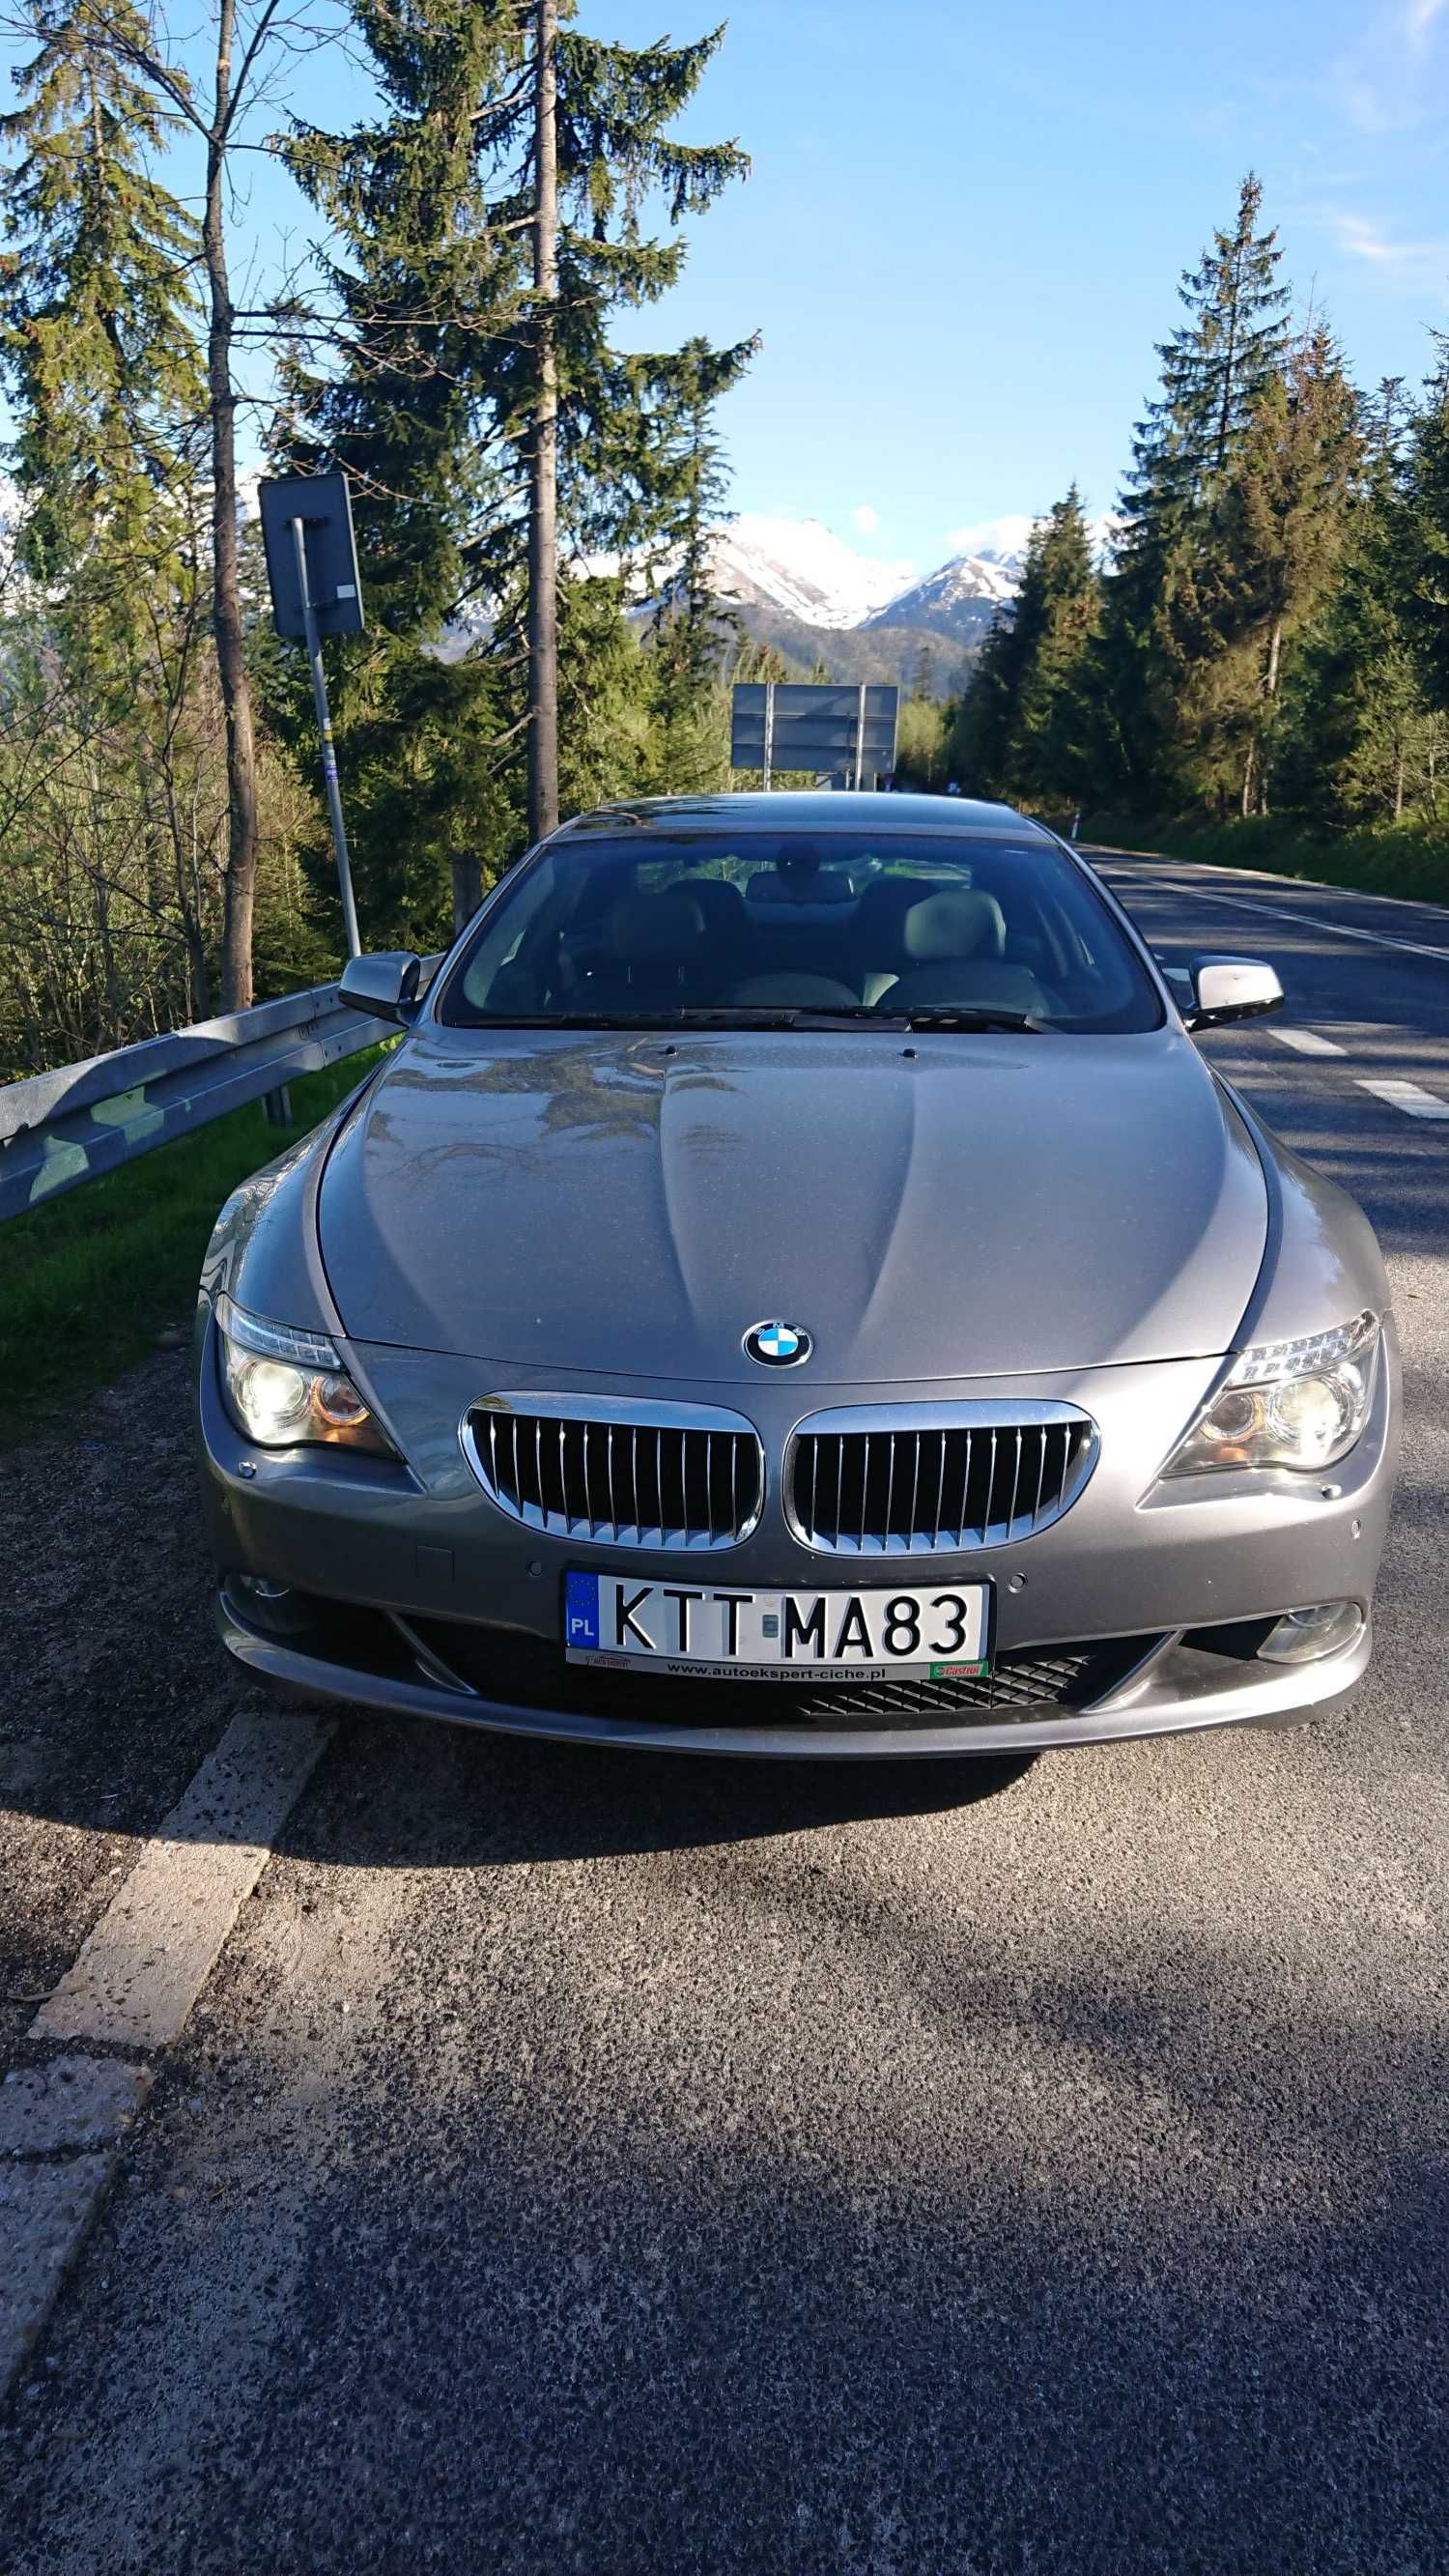 BMW Seria 6, 650i, LCI, 2010r, 4.8, zadbana, sportpakiet